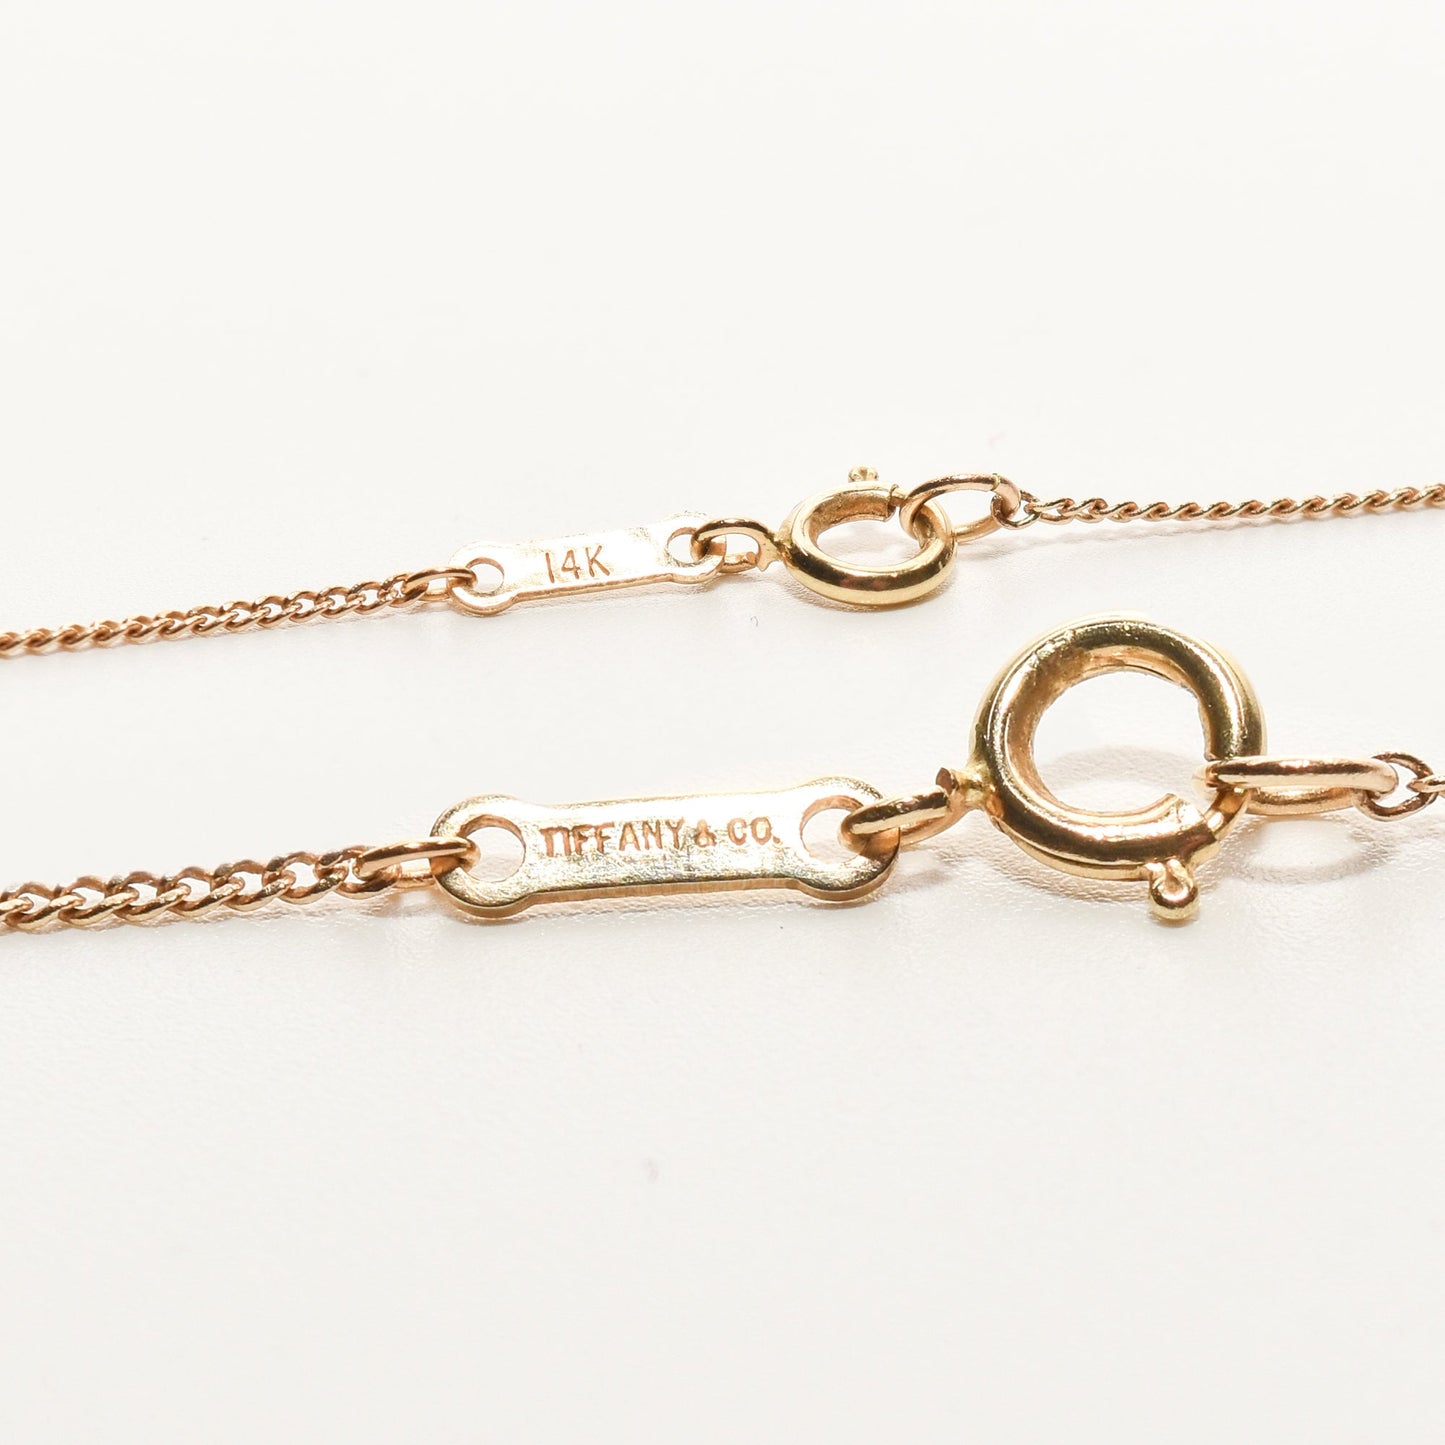 14K gold Tiffany & Co. lapis lazuli heart cross pendant on an 18-inch chain, minimalist gemstone necklace.